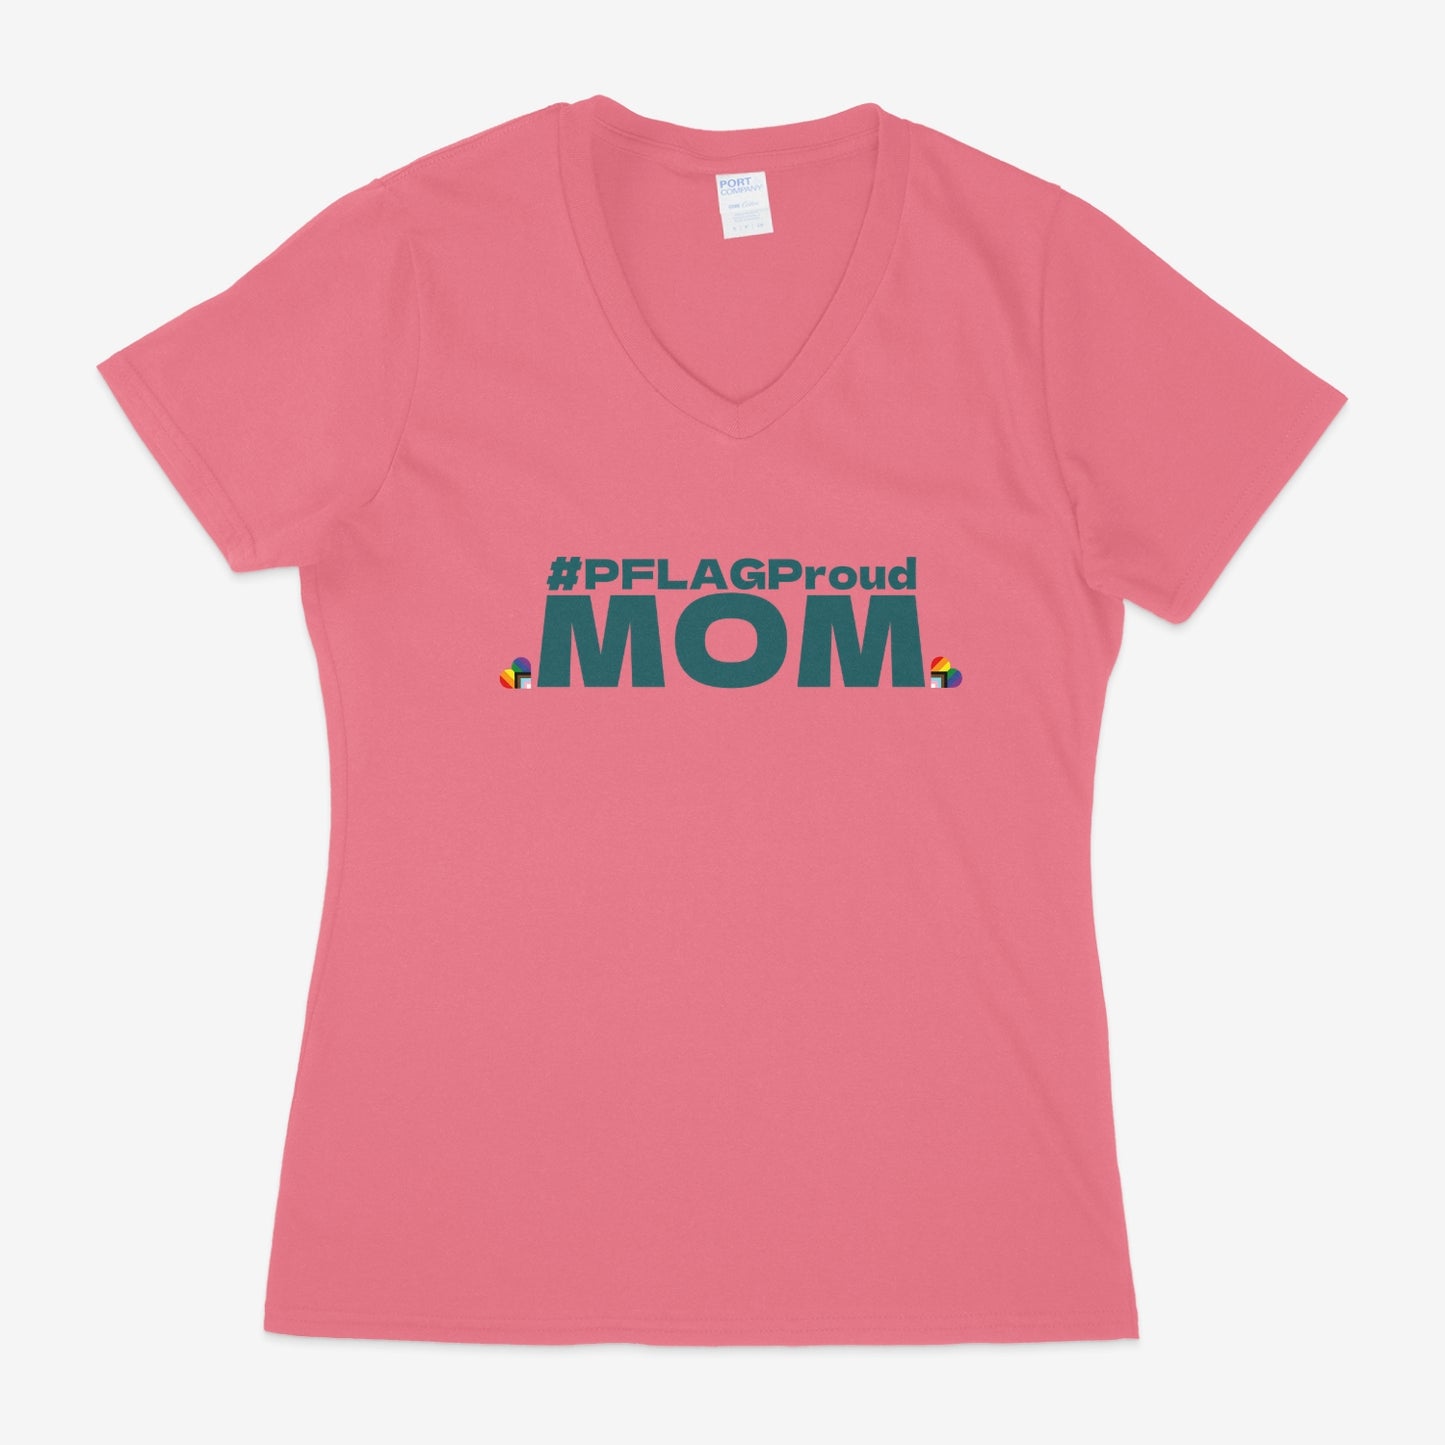 #PFLAGProud Mom - Fitted-Cut V-Neck Short Sleeve T-Shirt